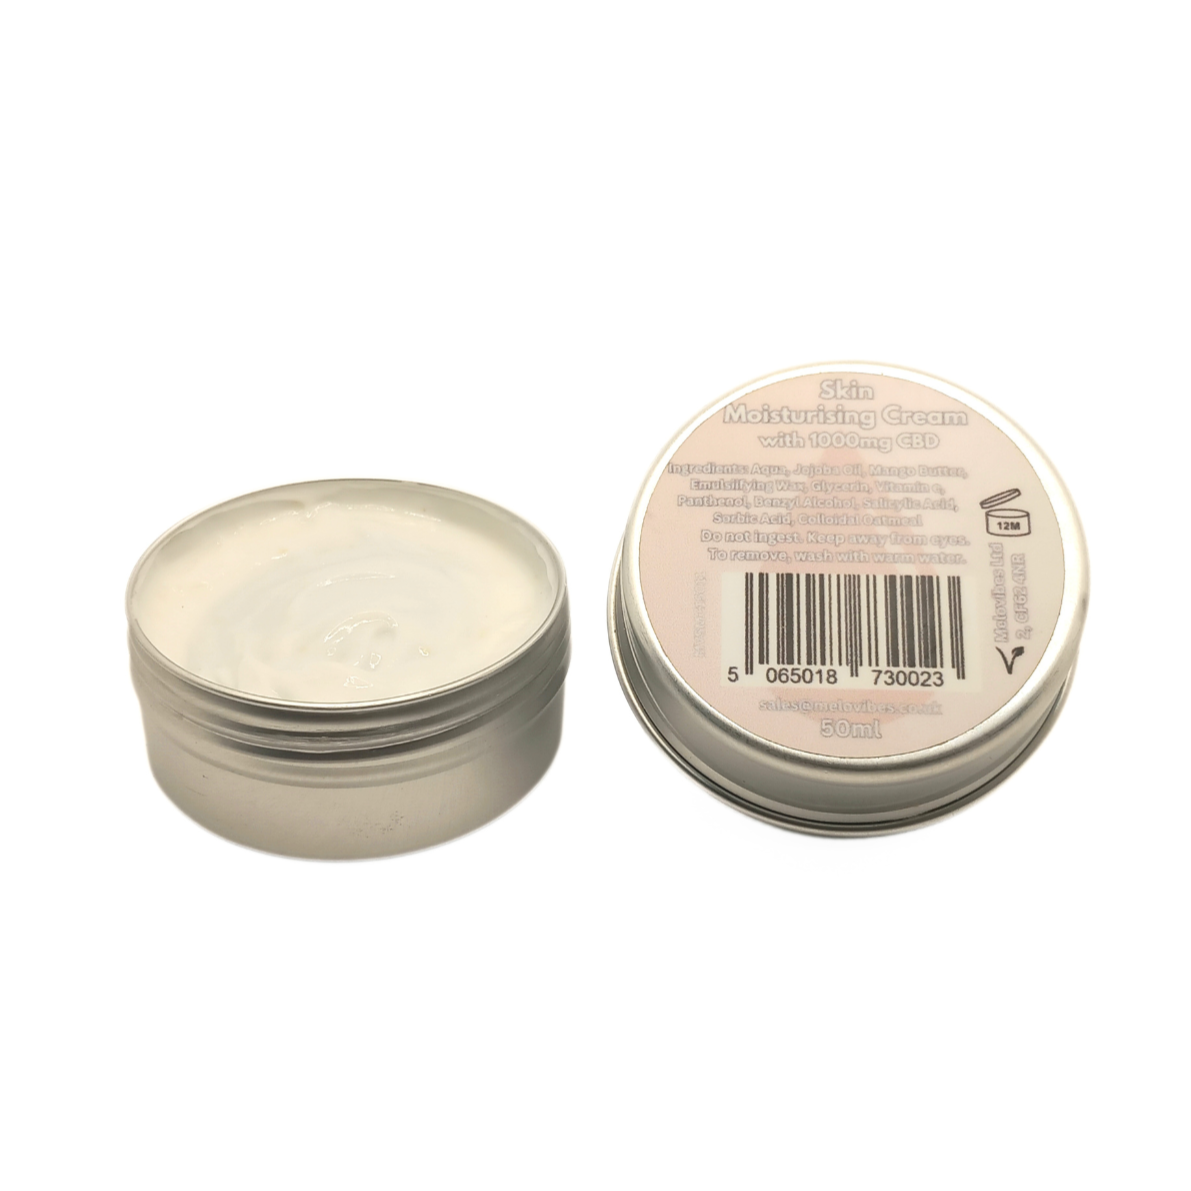 Melovibes Skin Moisturising Cream with 1000mg CBD - 50ml (Natural Scent)